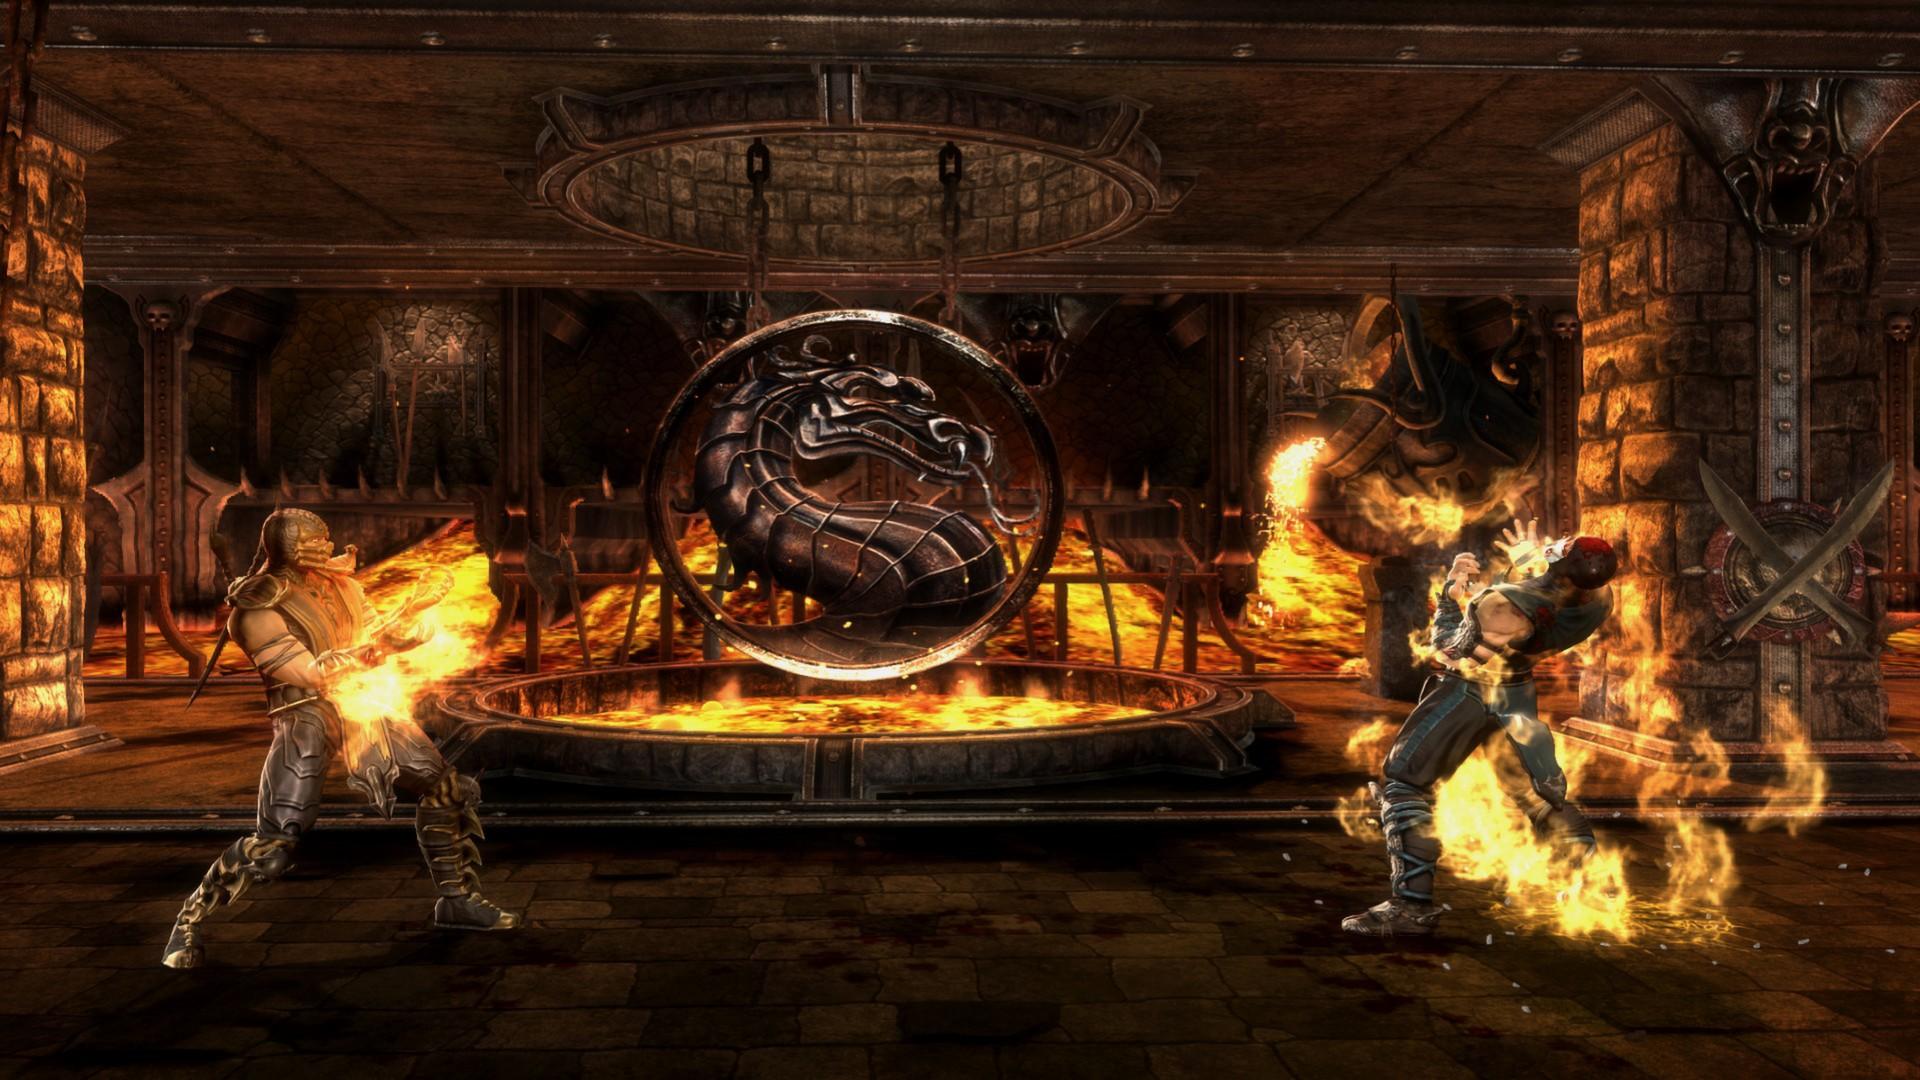 Screenshot 1 of Edición completa de combate mortal 